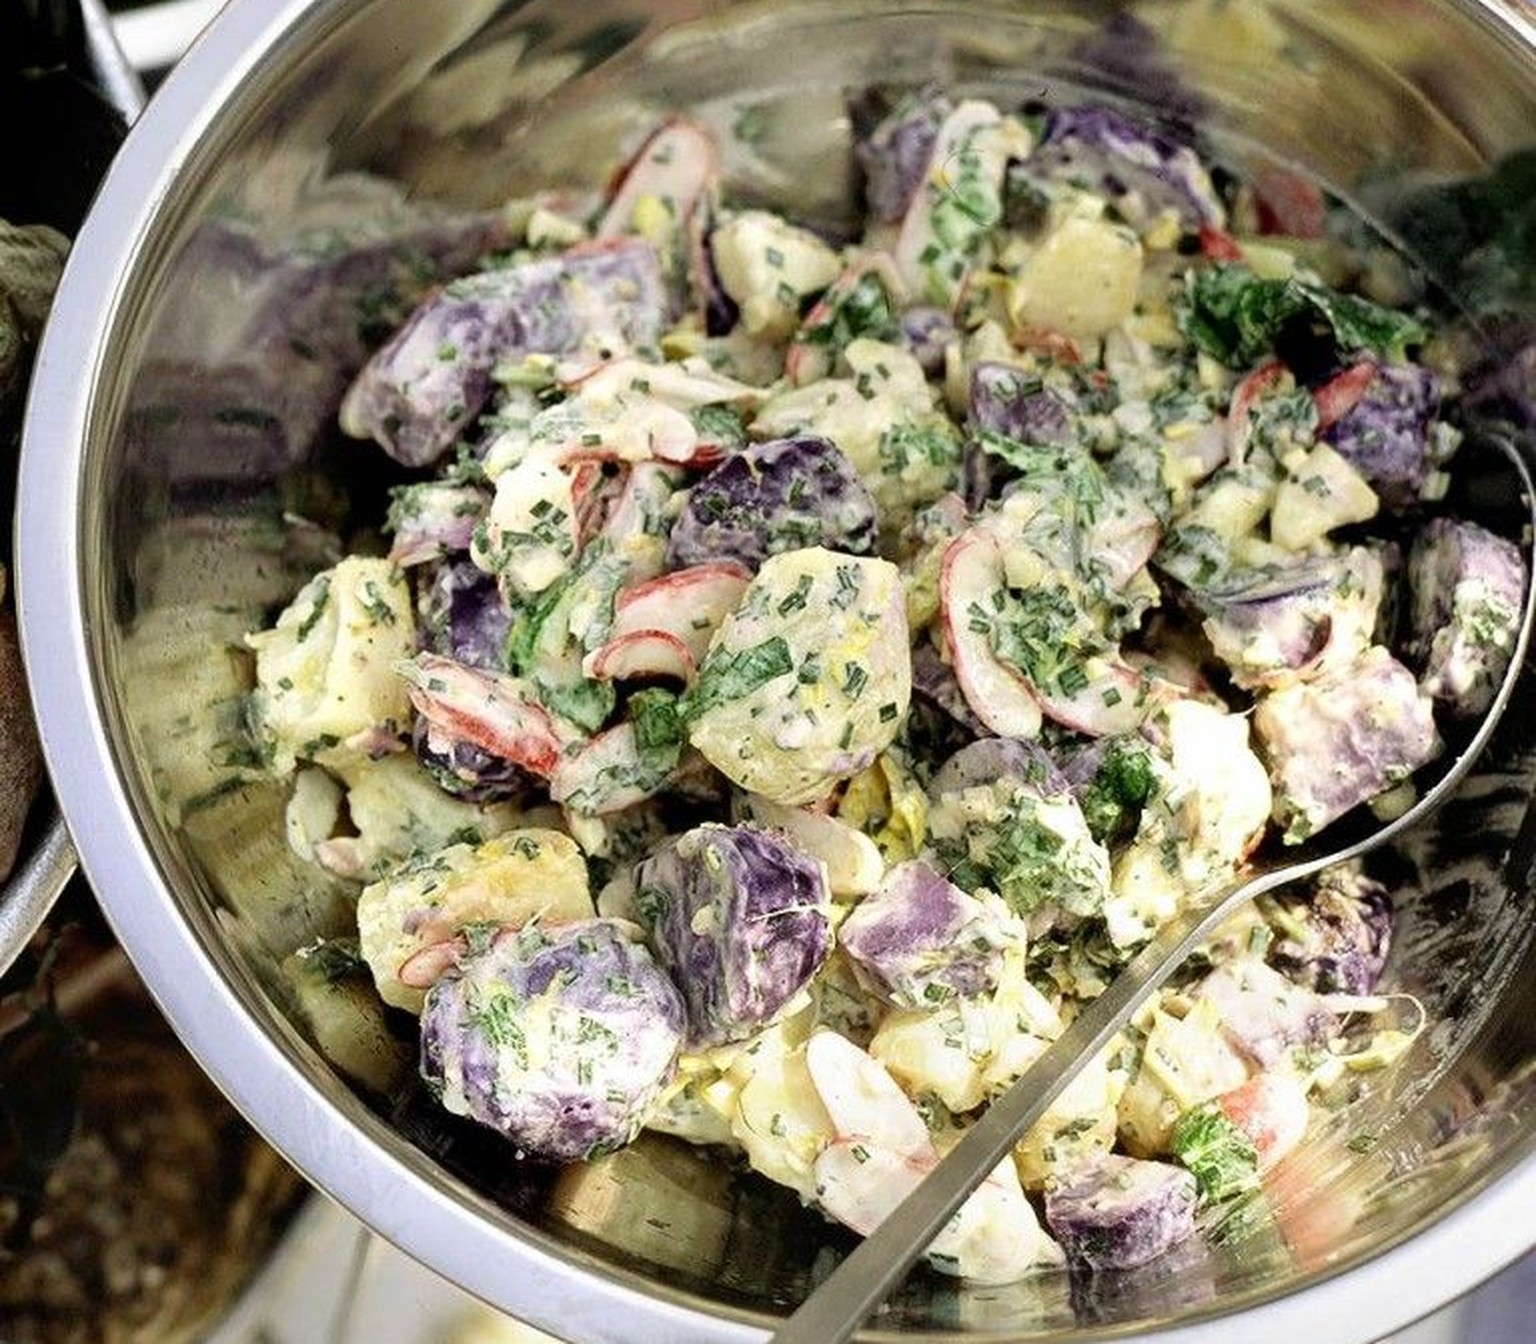 violetter kartoffelsalat essen food salat vegetarisch https://www.jamieoliver.com/de/recipes/vegetables-recipes/purple-potato-salad/